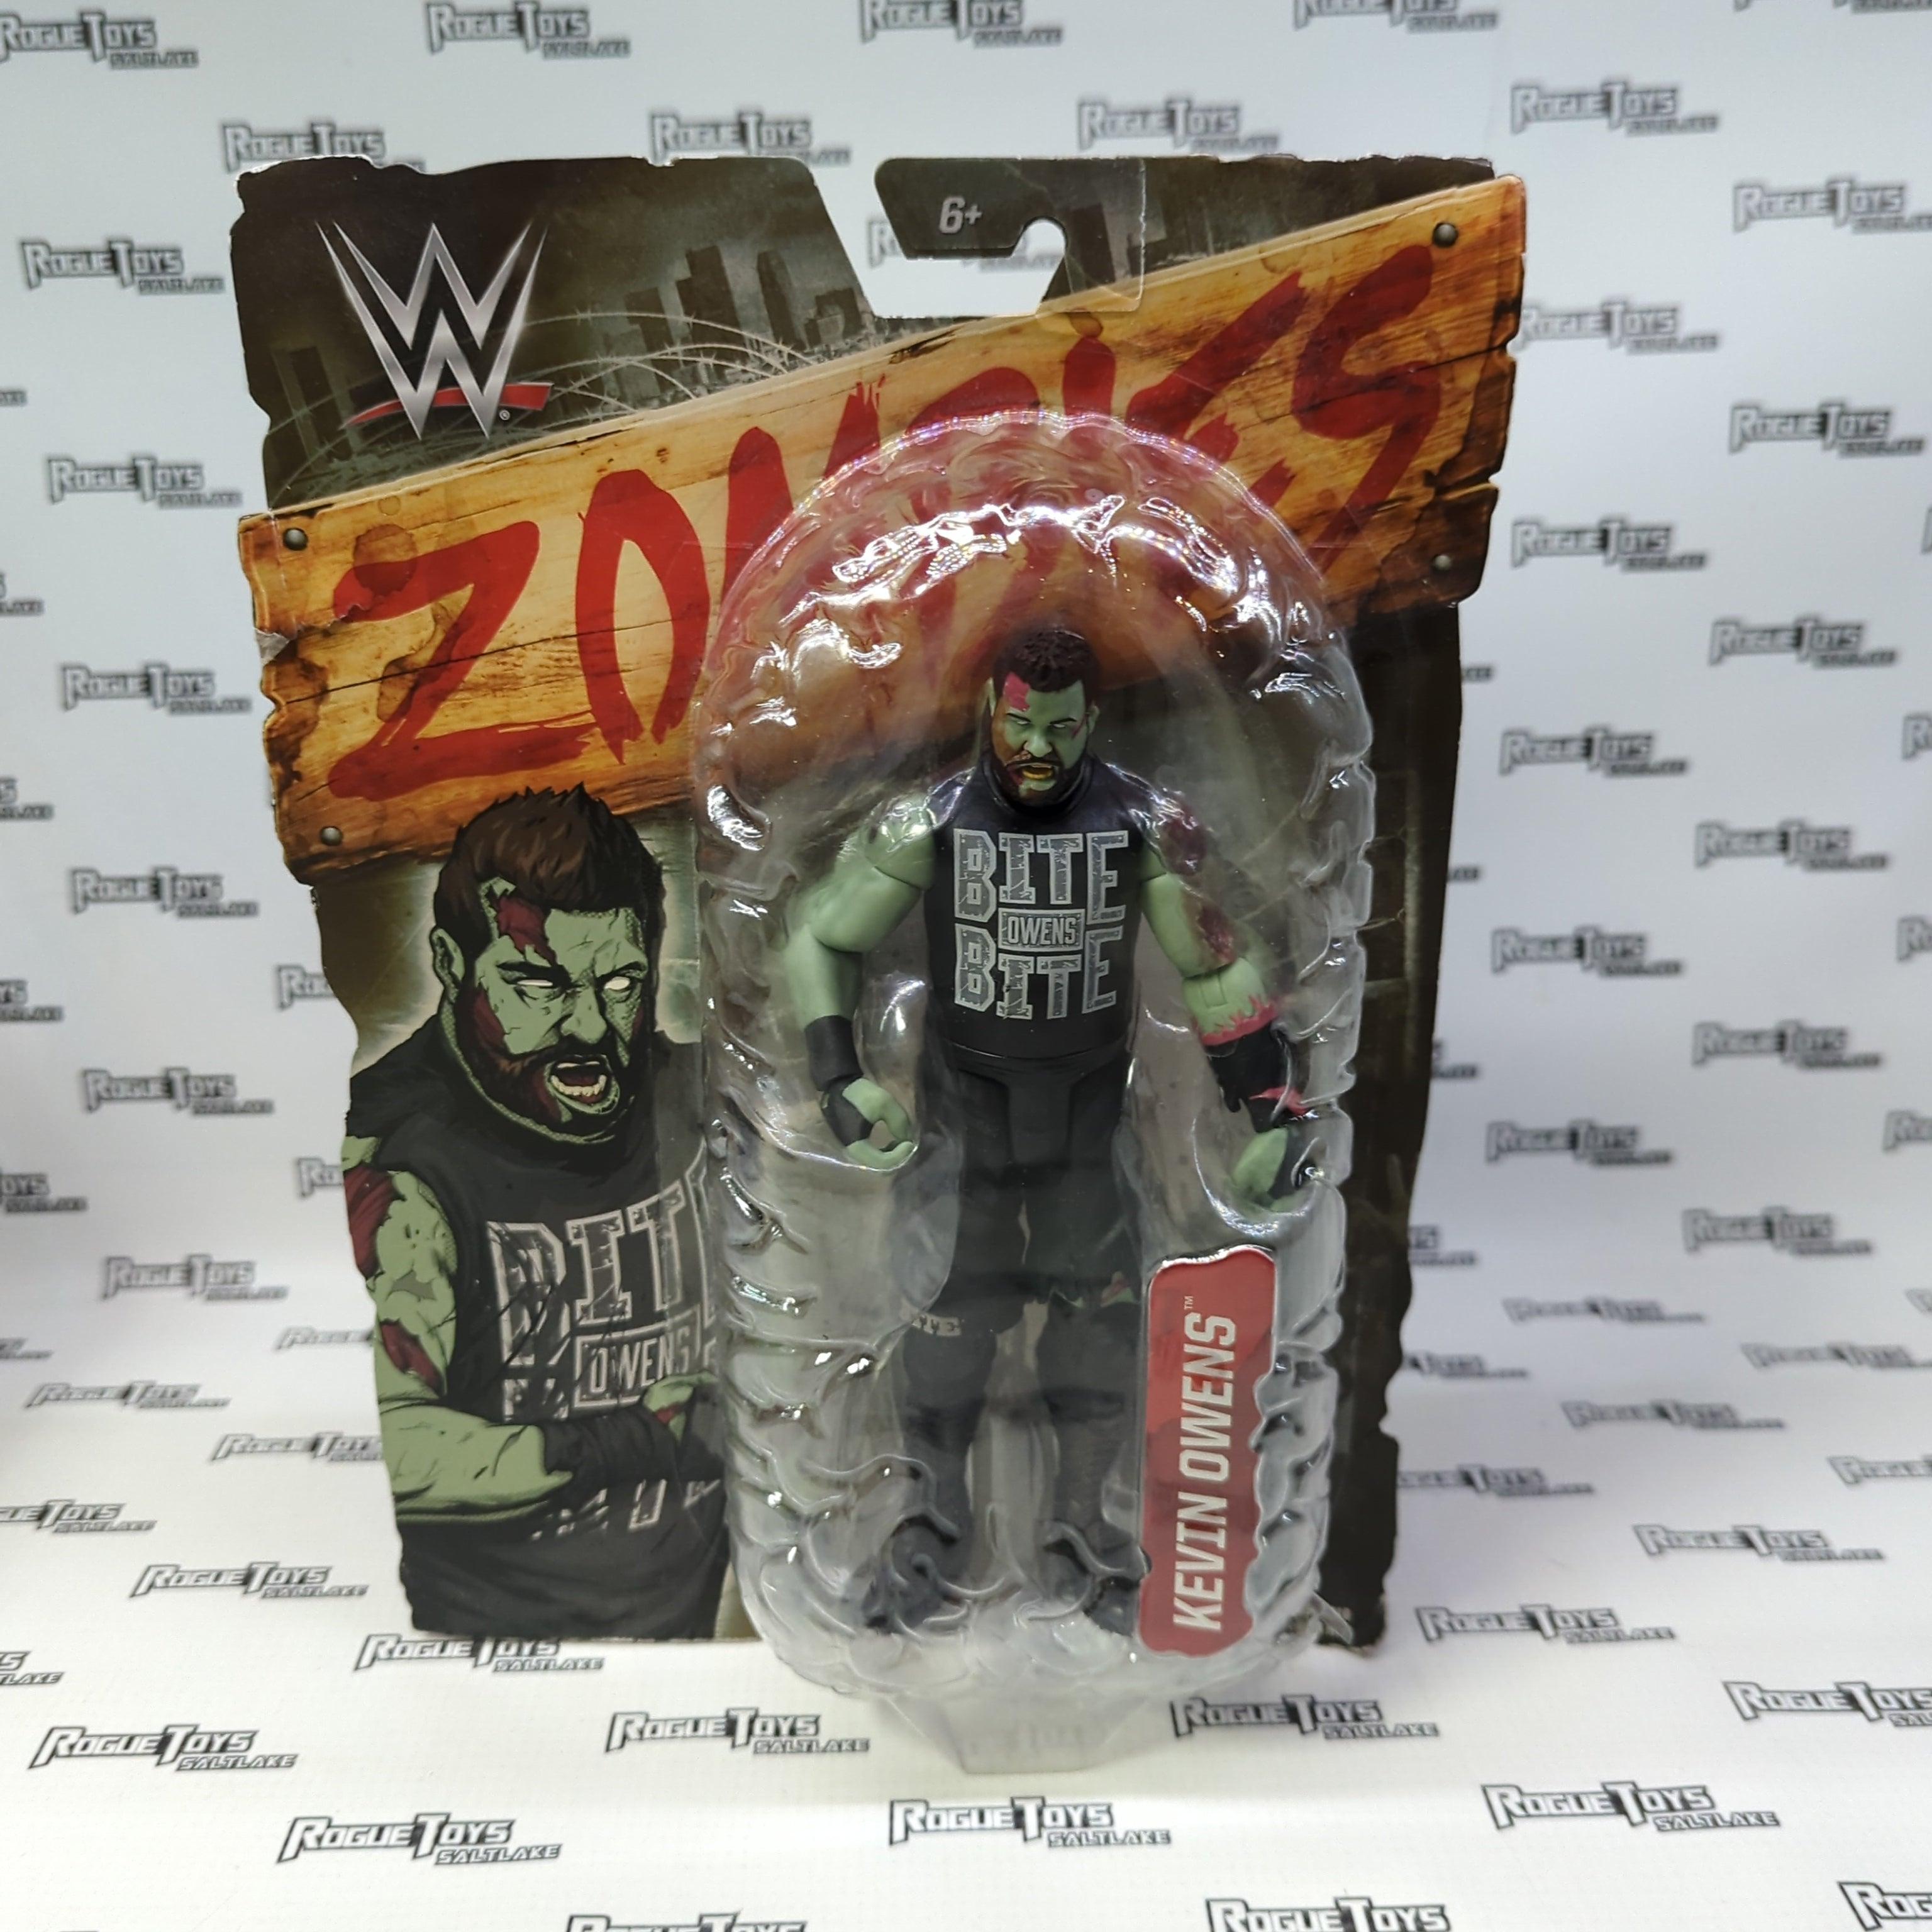 Mattel WWE Zombies Kevin Owens Zombified